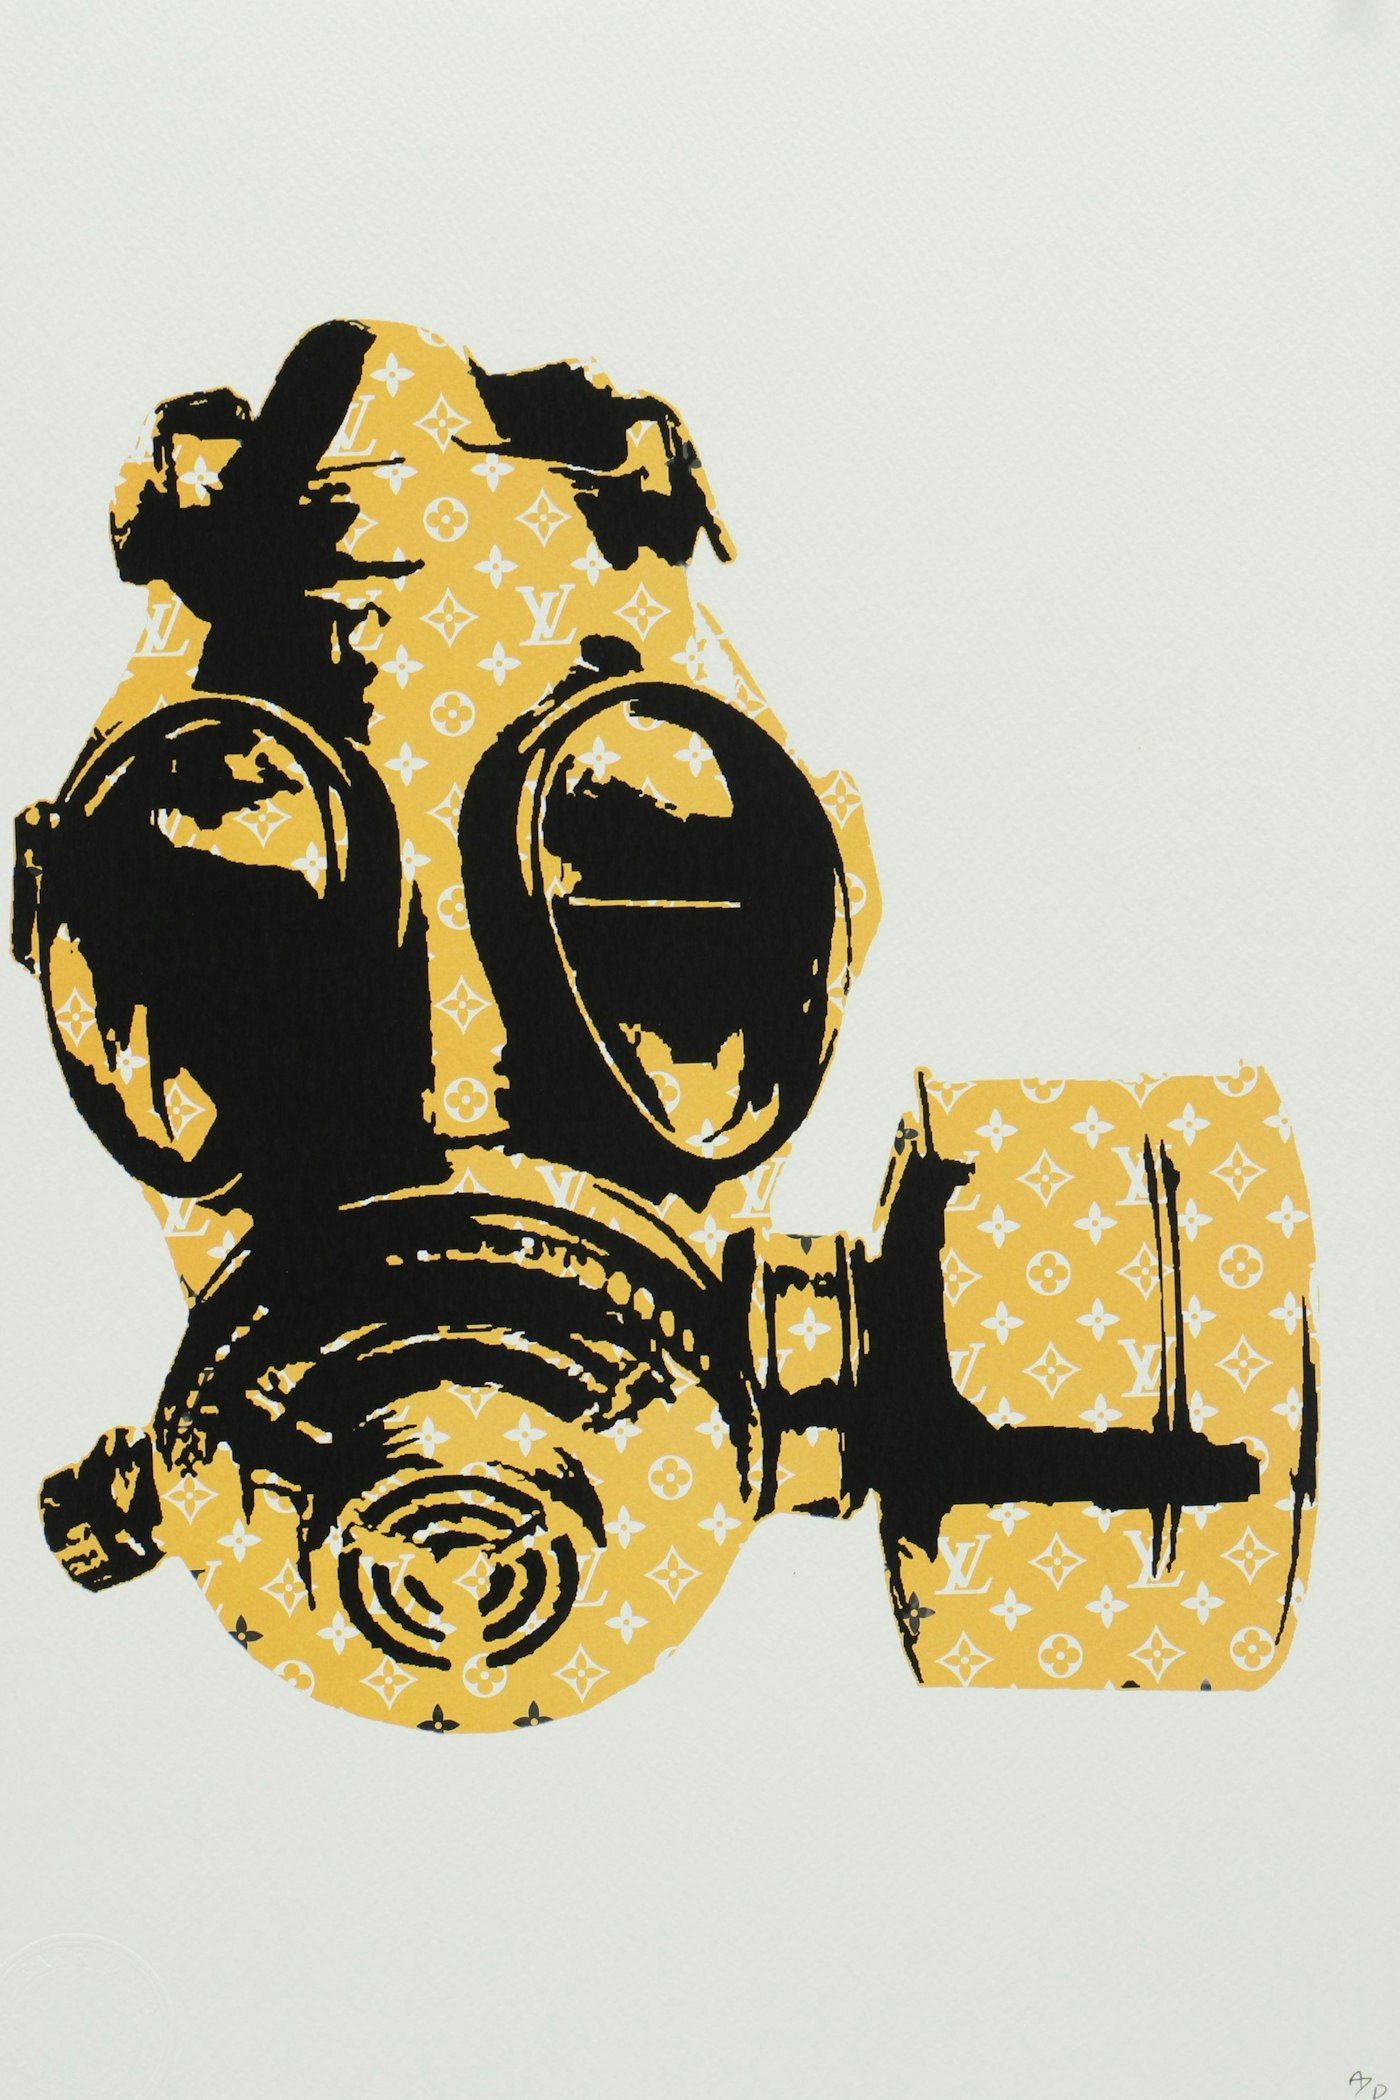 Death NYC Pop Art Offset Lithograph of Louis Vuitton Gas Mask | EBTH